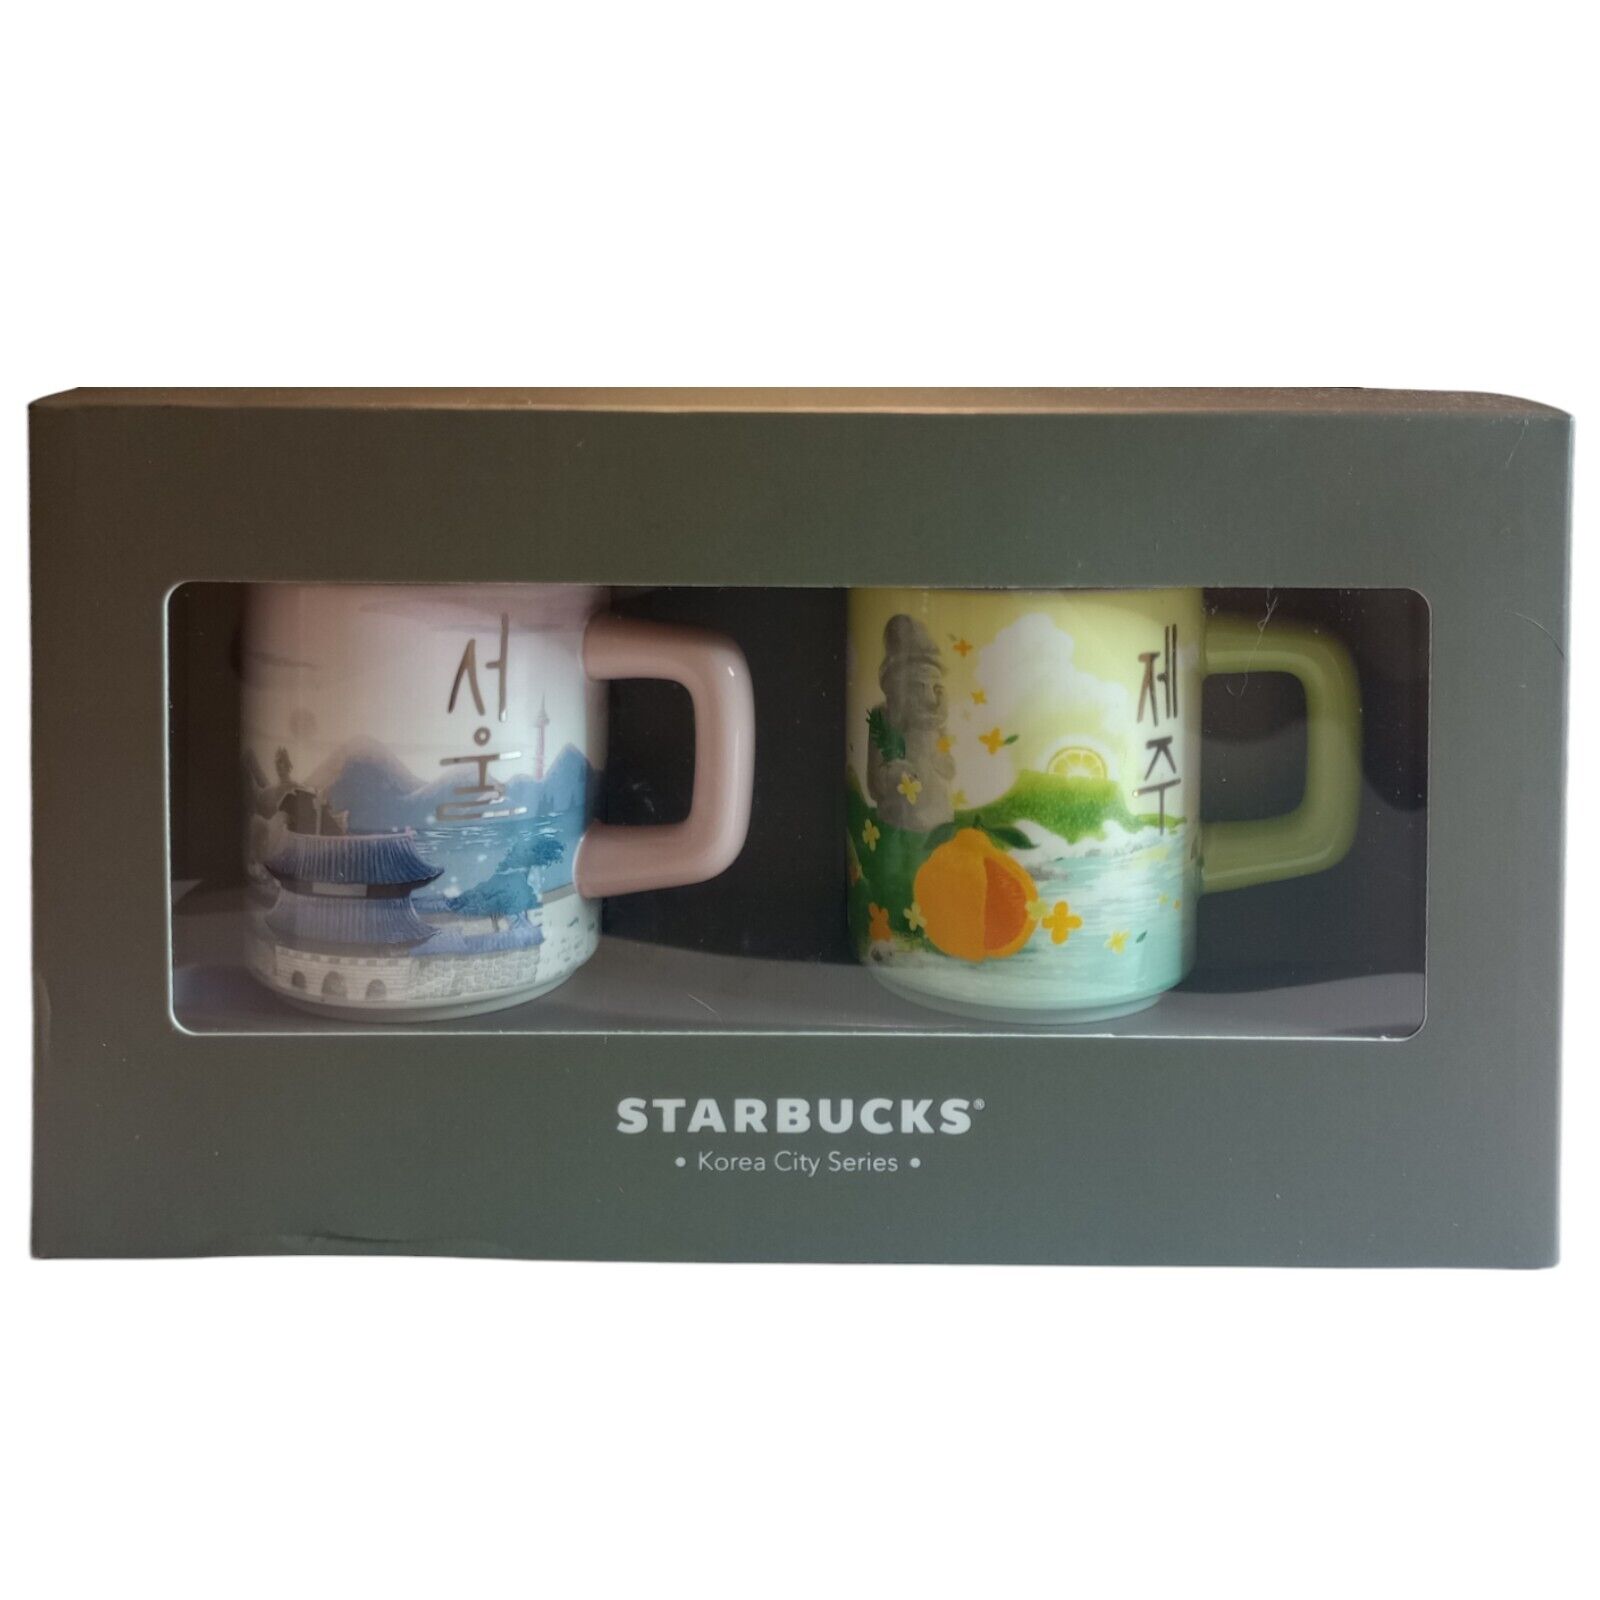 Starbucks Korea City Series: Seoul & Jeju Demi Mug Set - 89ml 3 oz Boxed Set